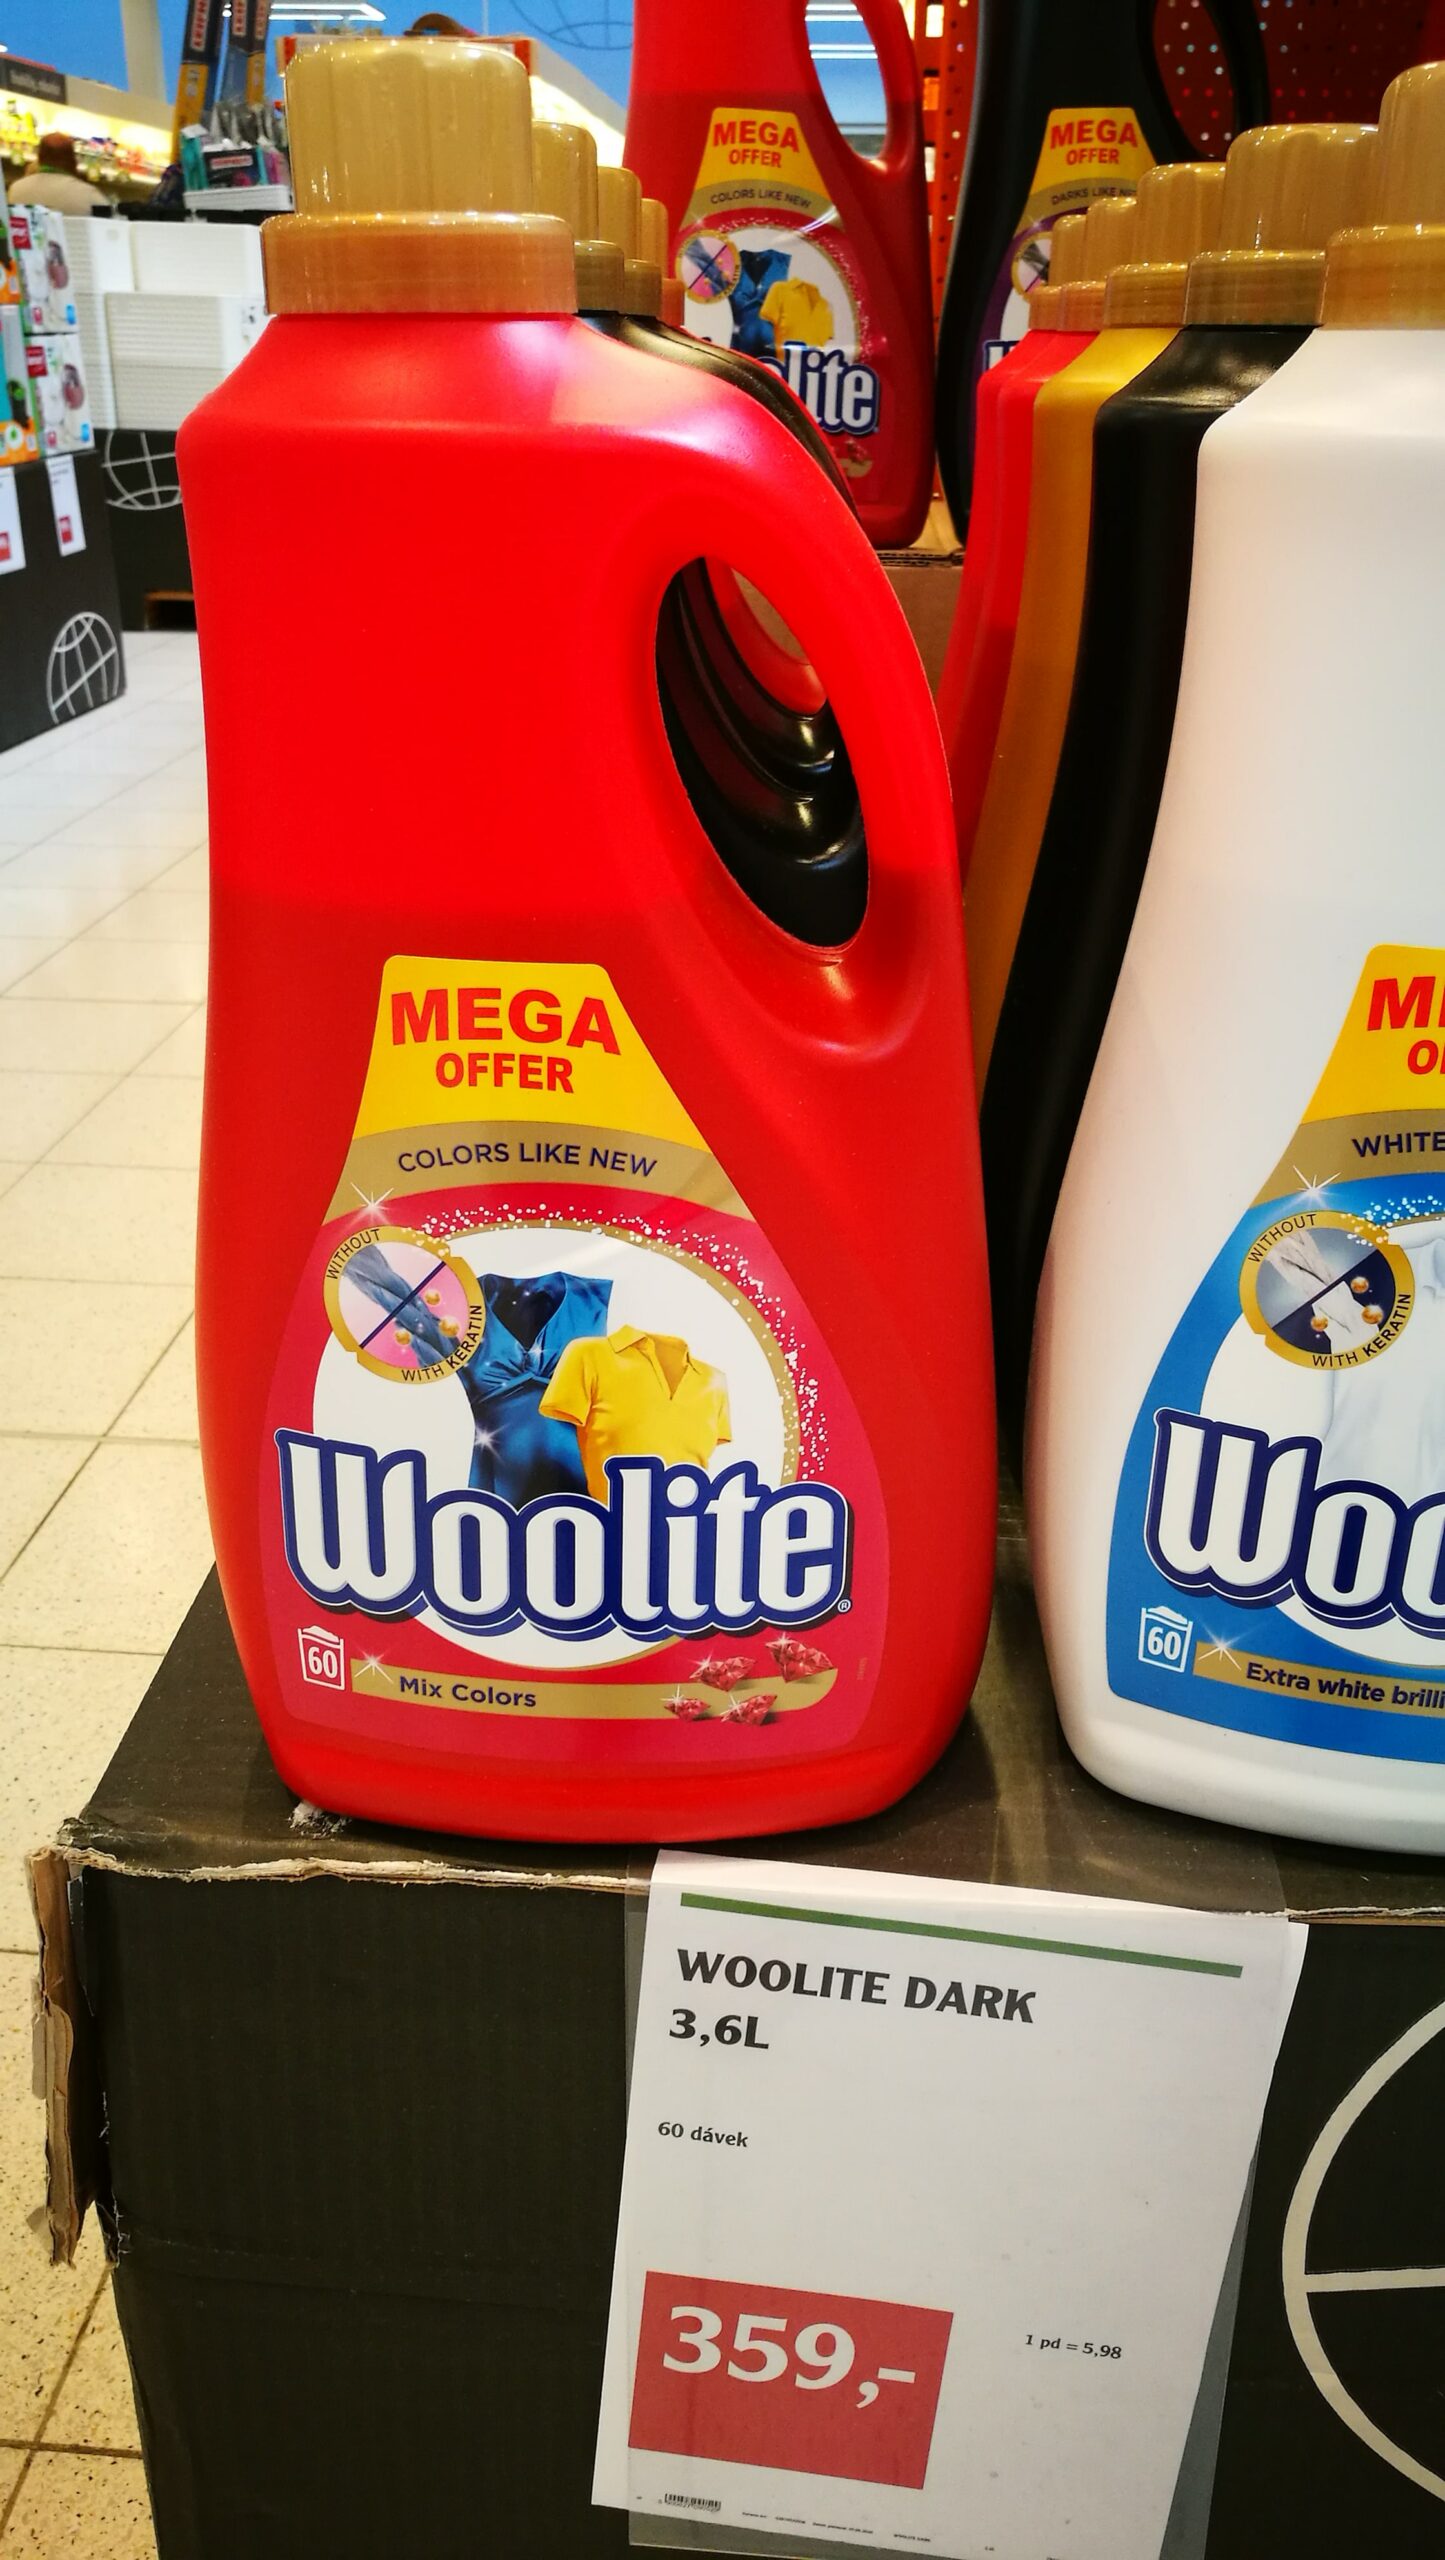 Woolite Mix Colors 3,6 l